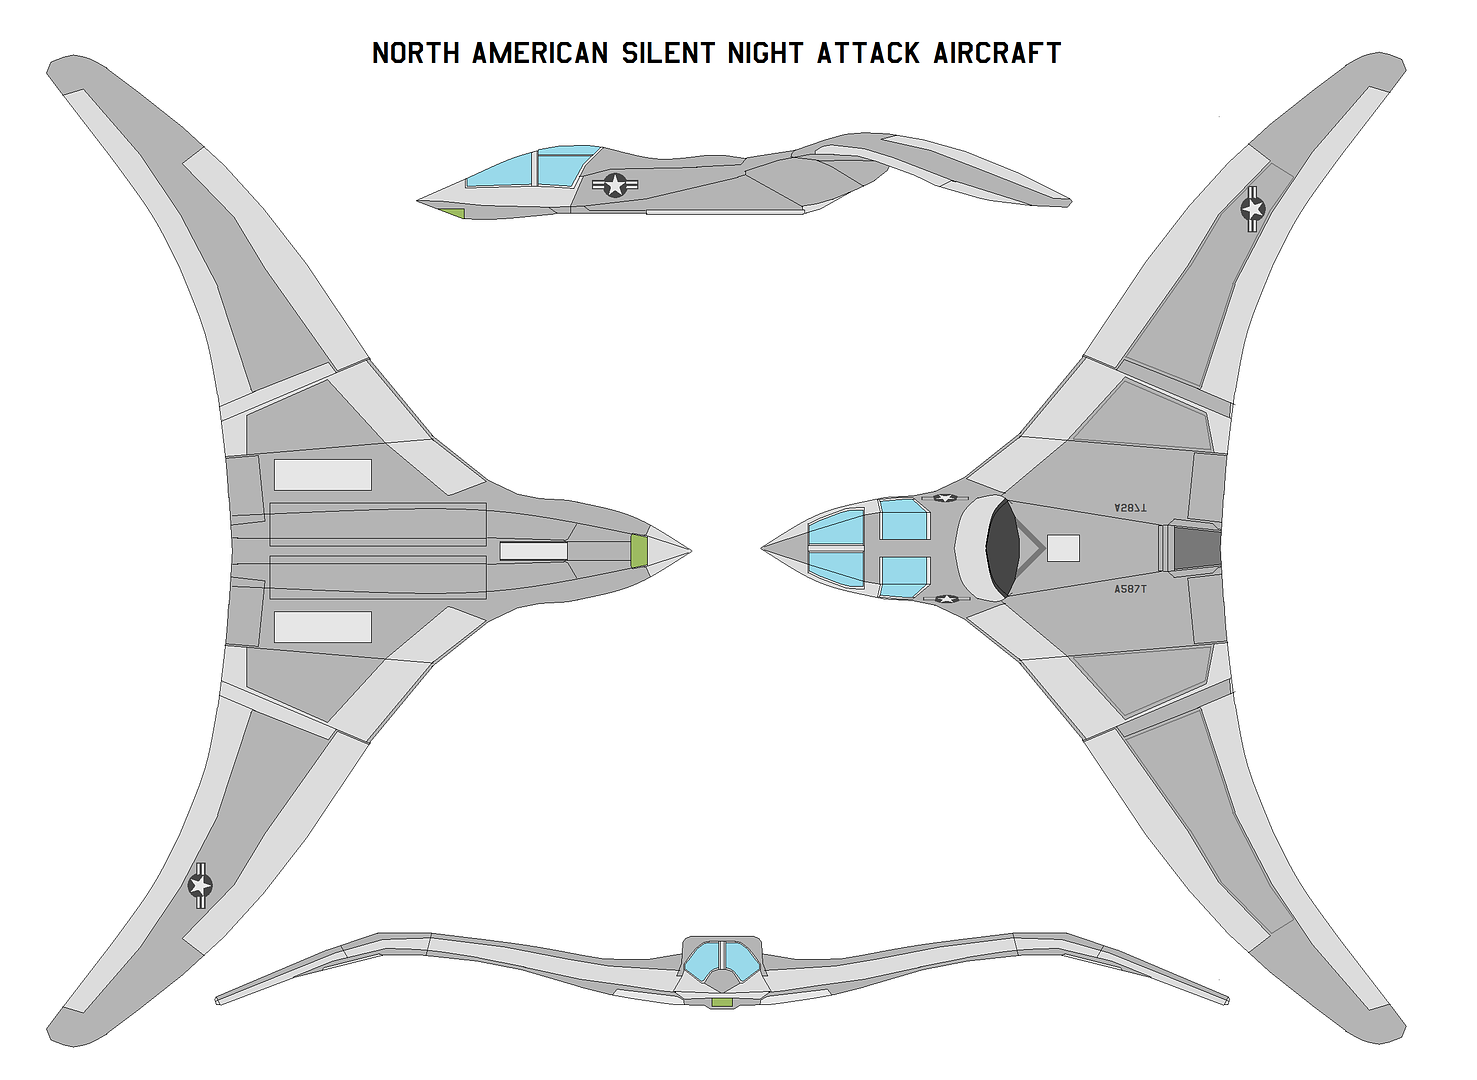 NorthAmericanSilentnightattackaircraft.png